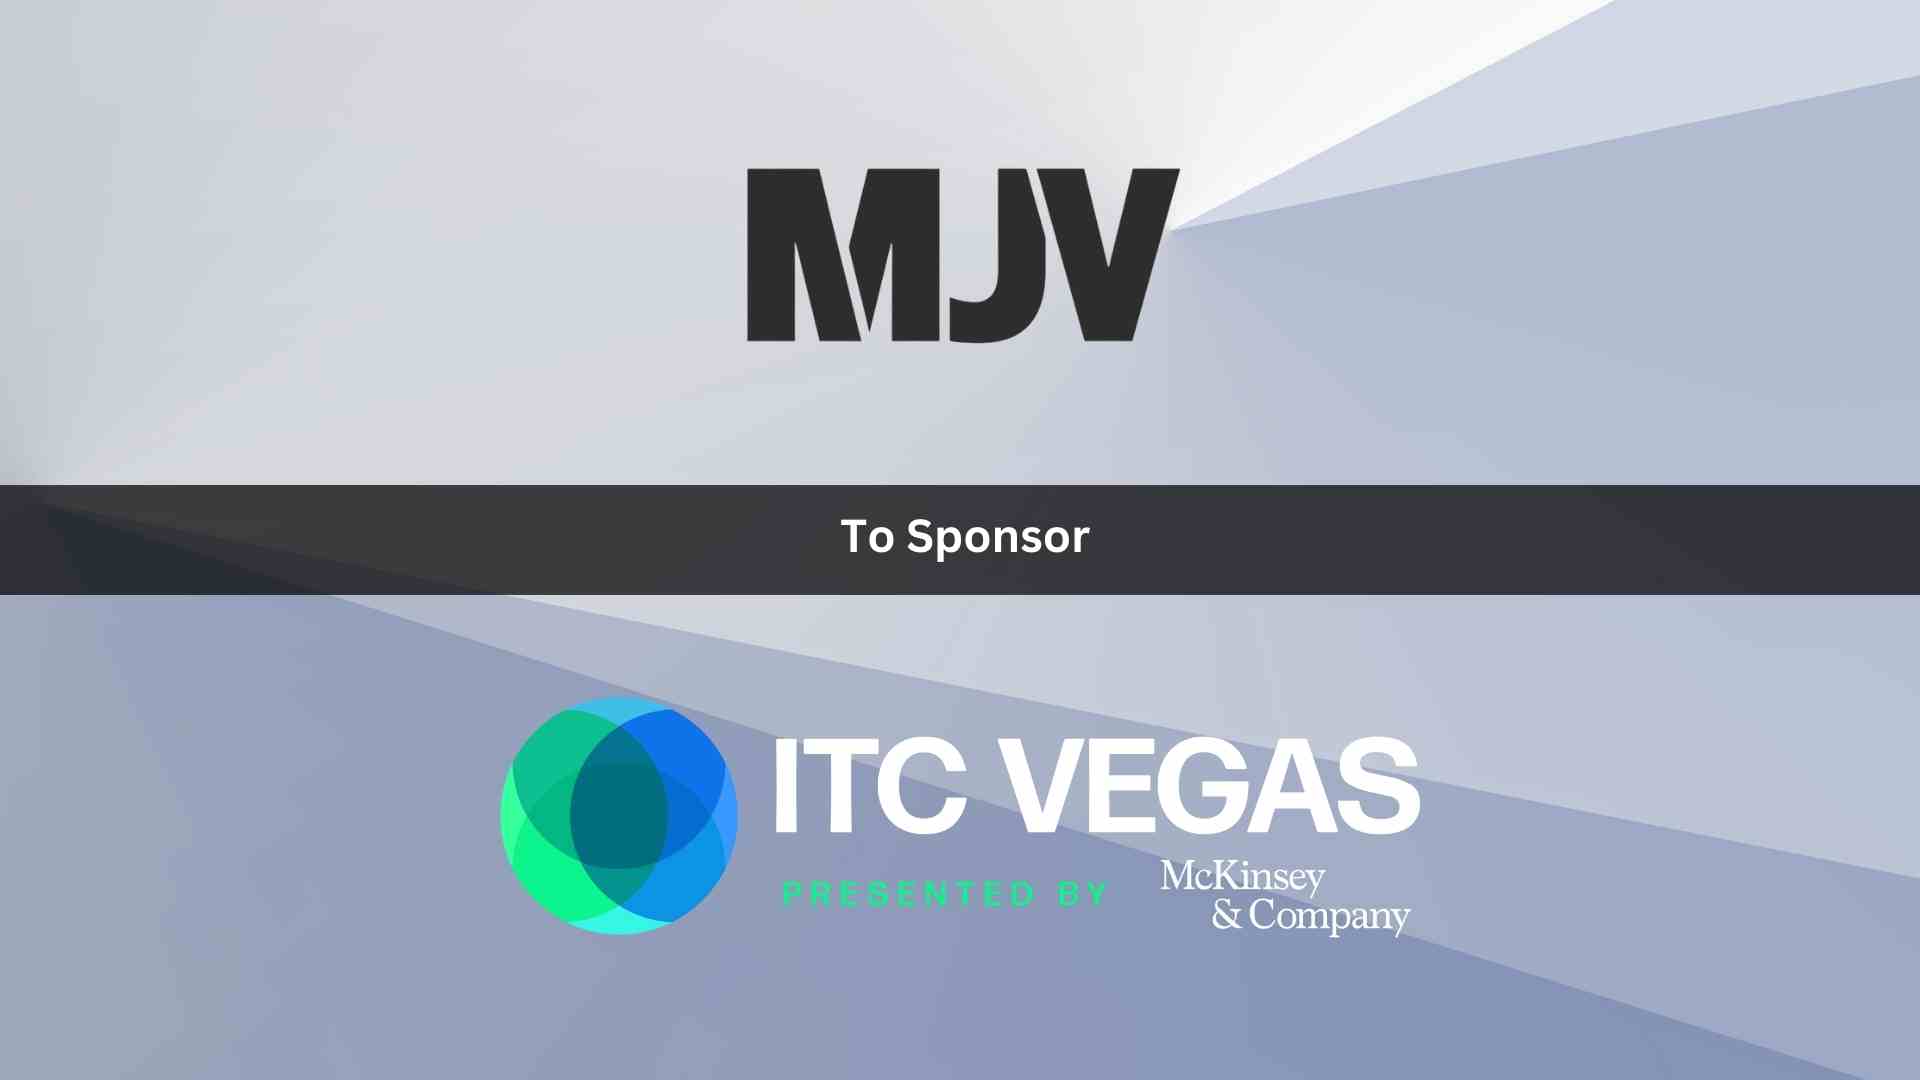 MJV Innovation to Sponsor InsureTech (ITC) Vegas